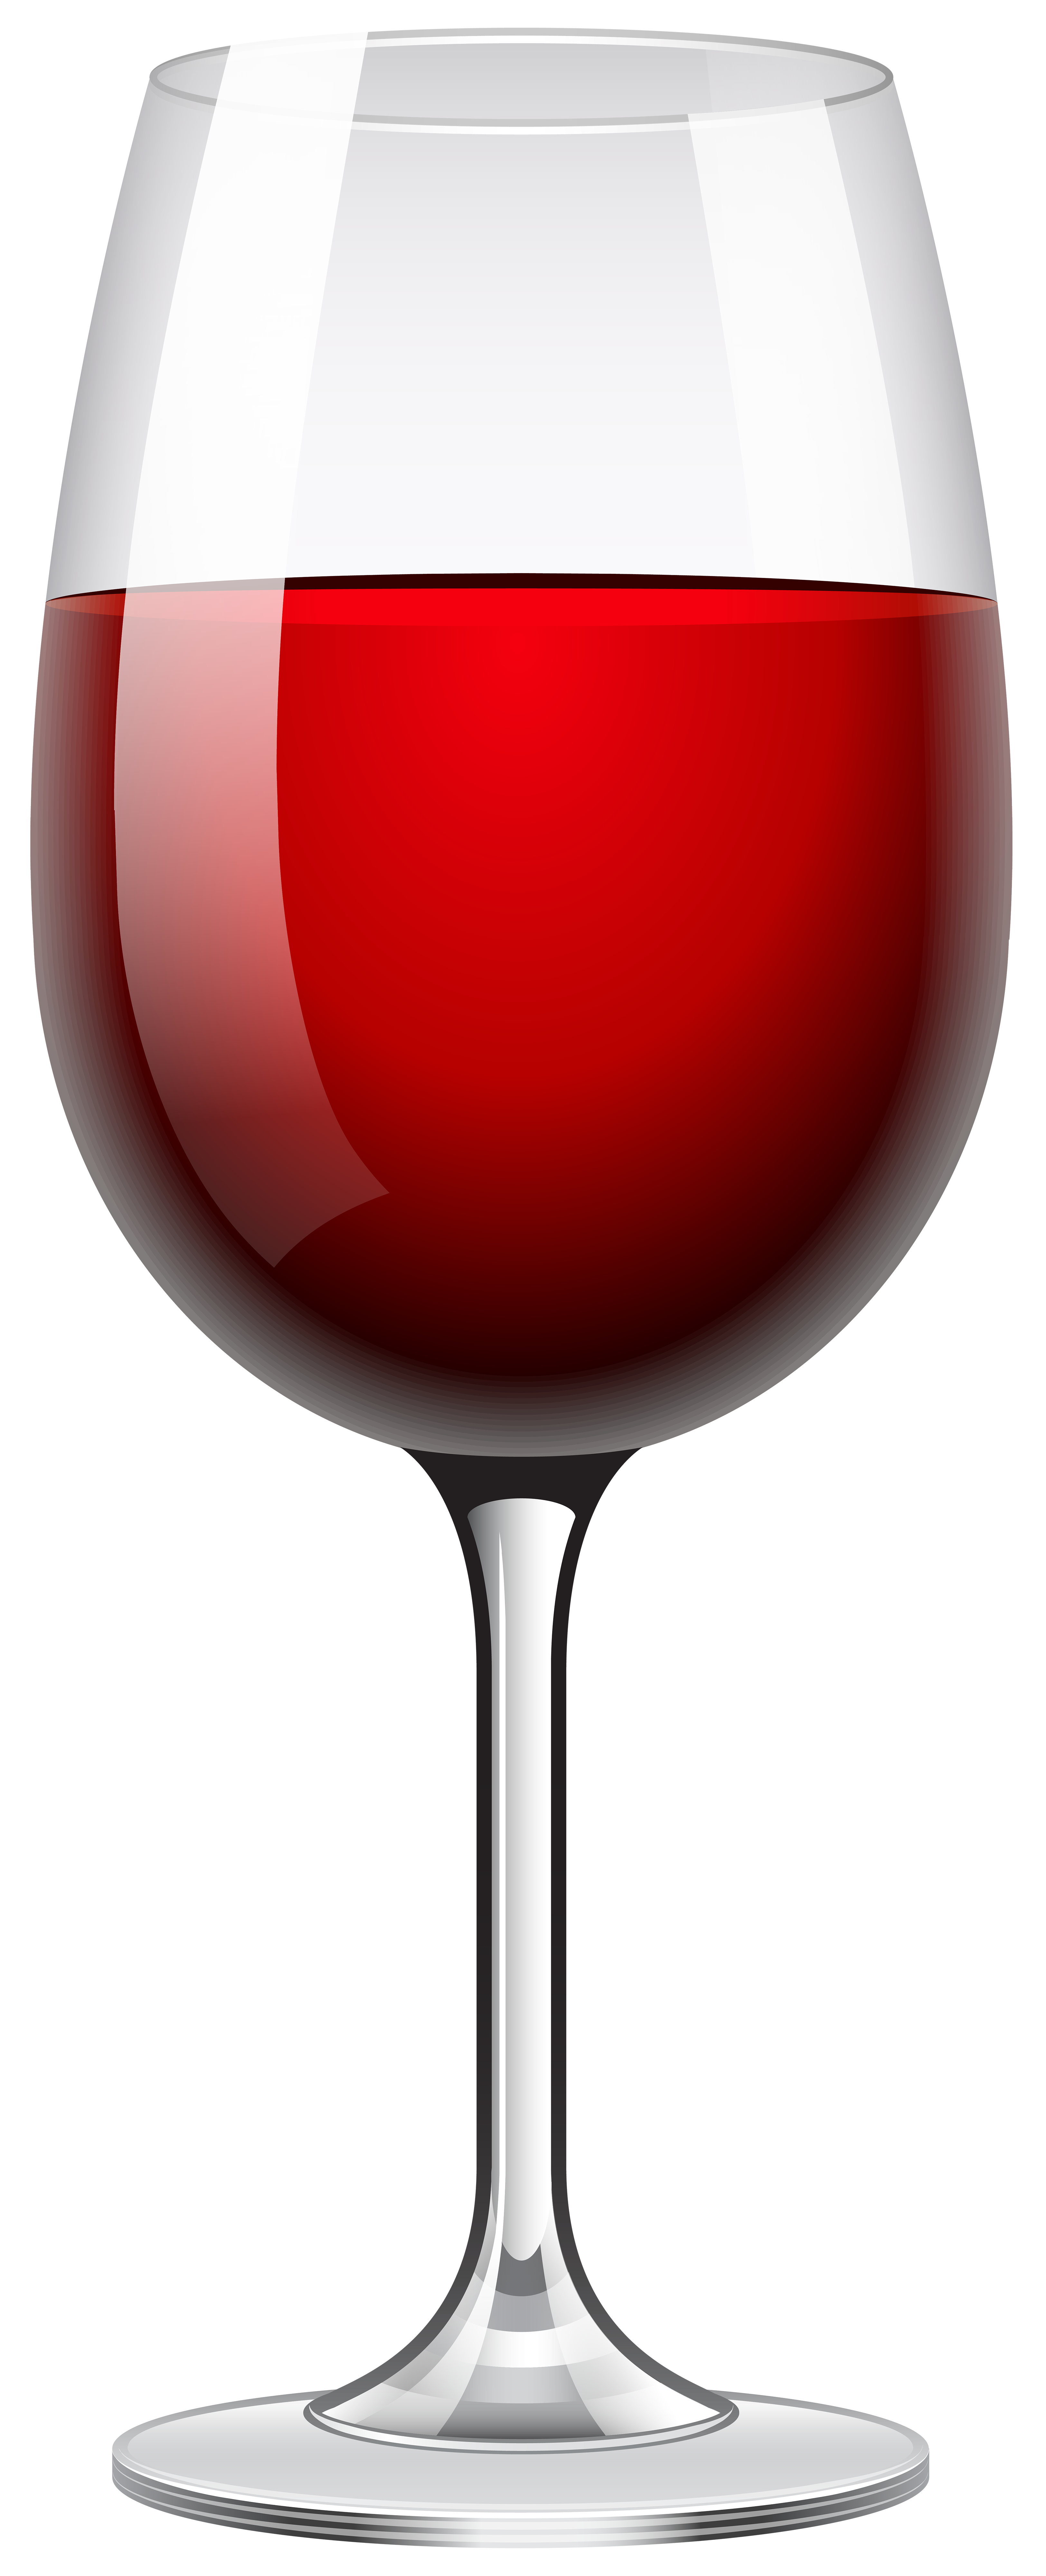 Red Wine White wine Champagne Wine glass